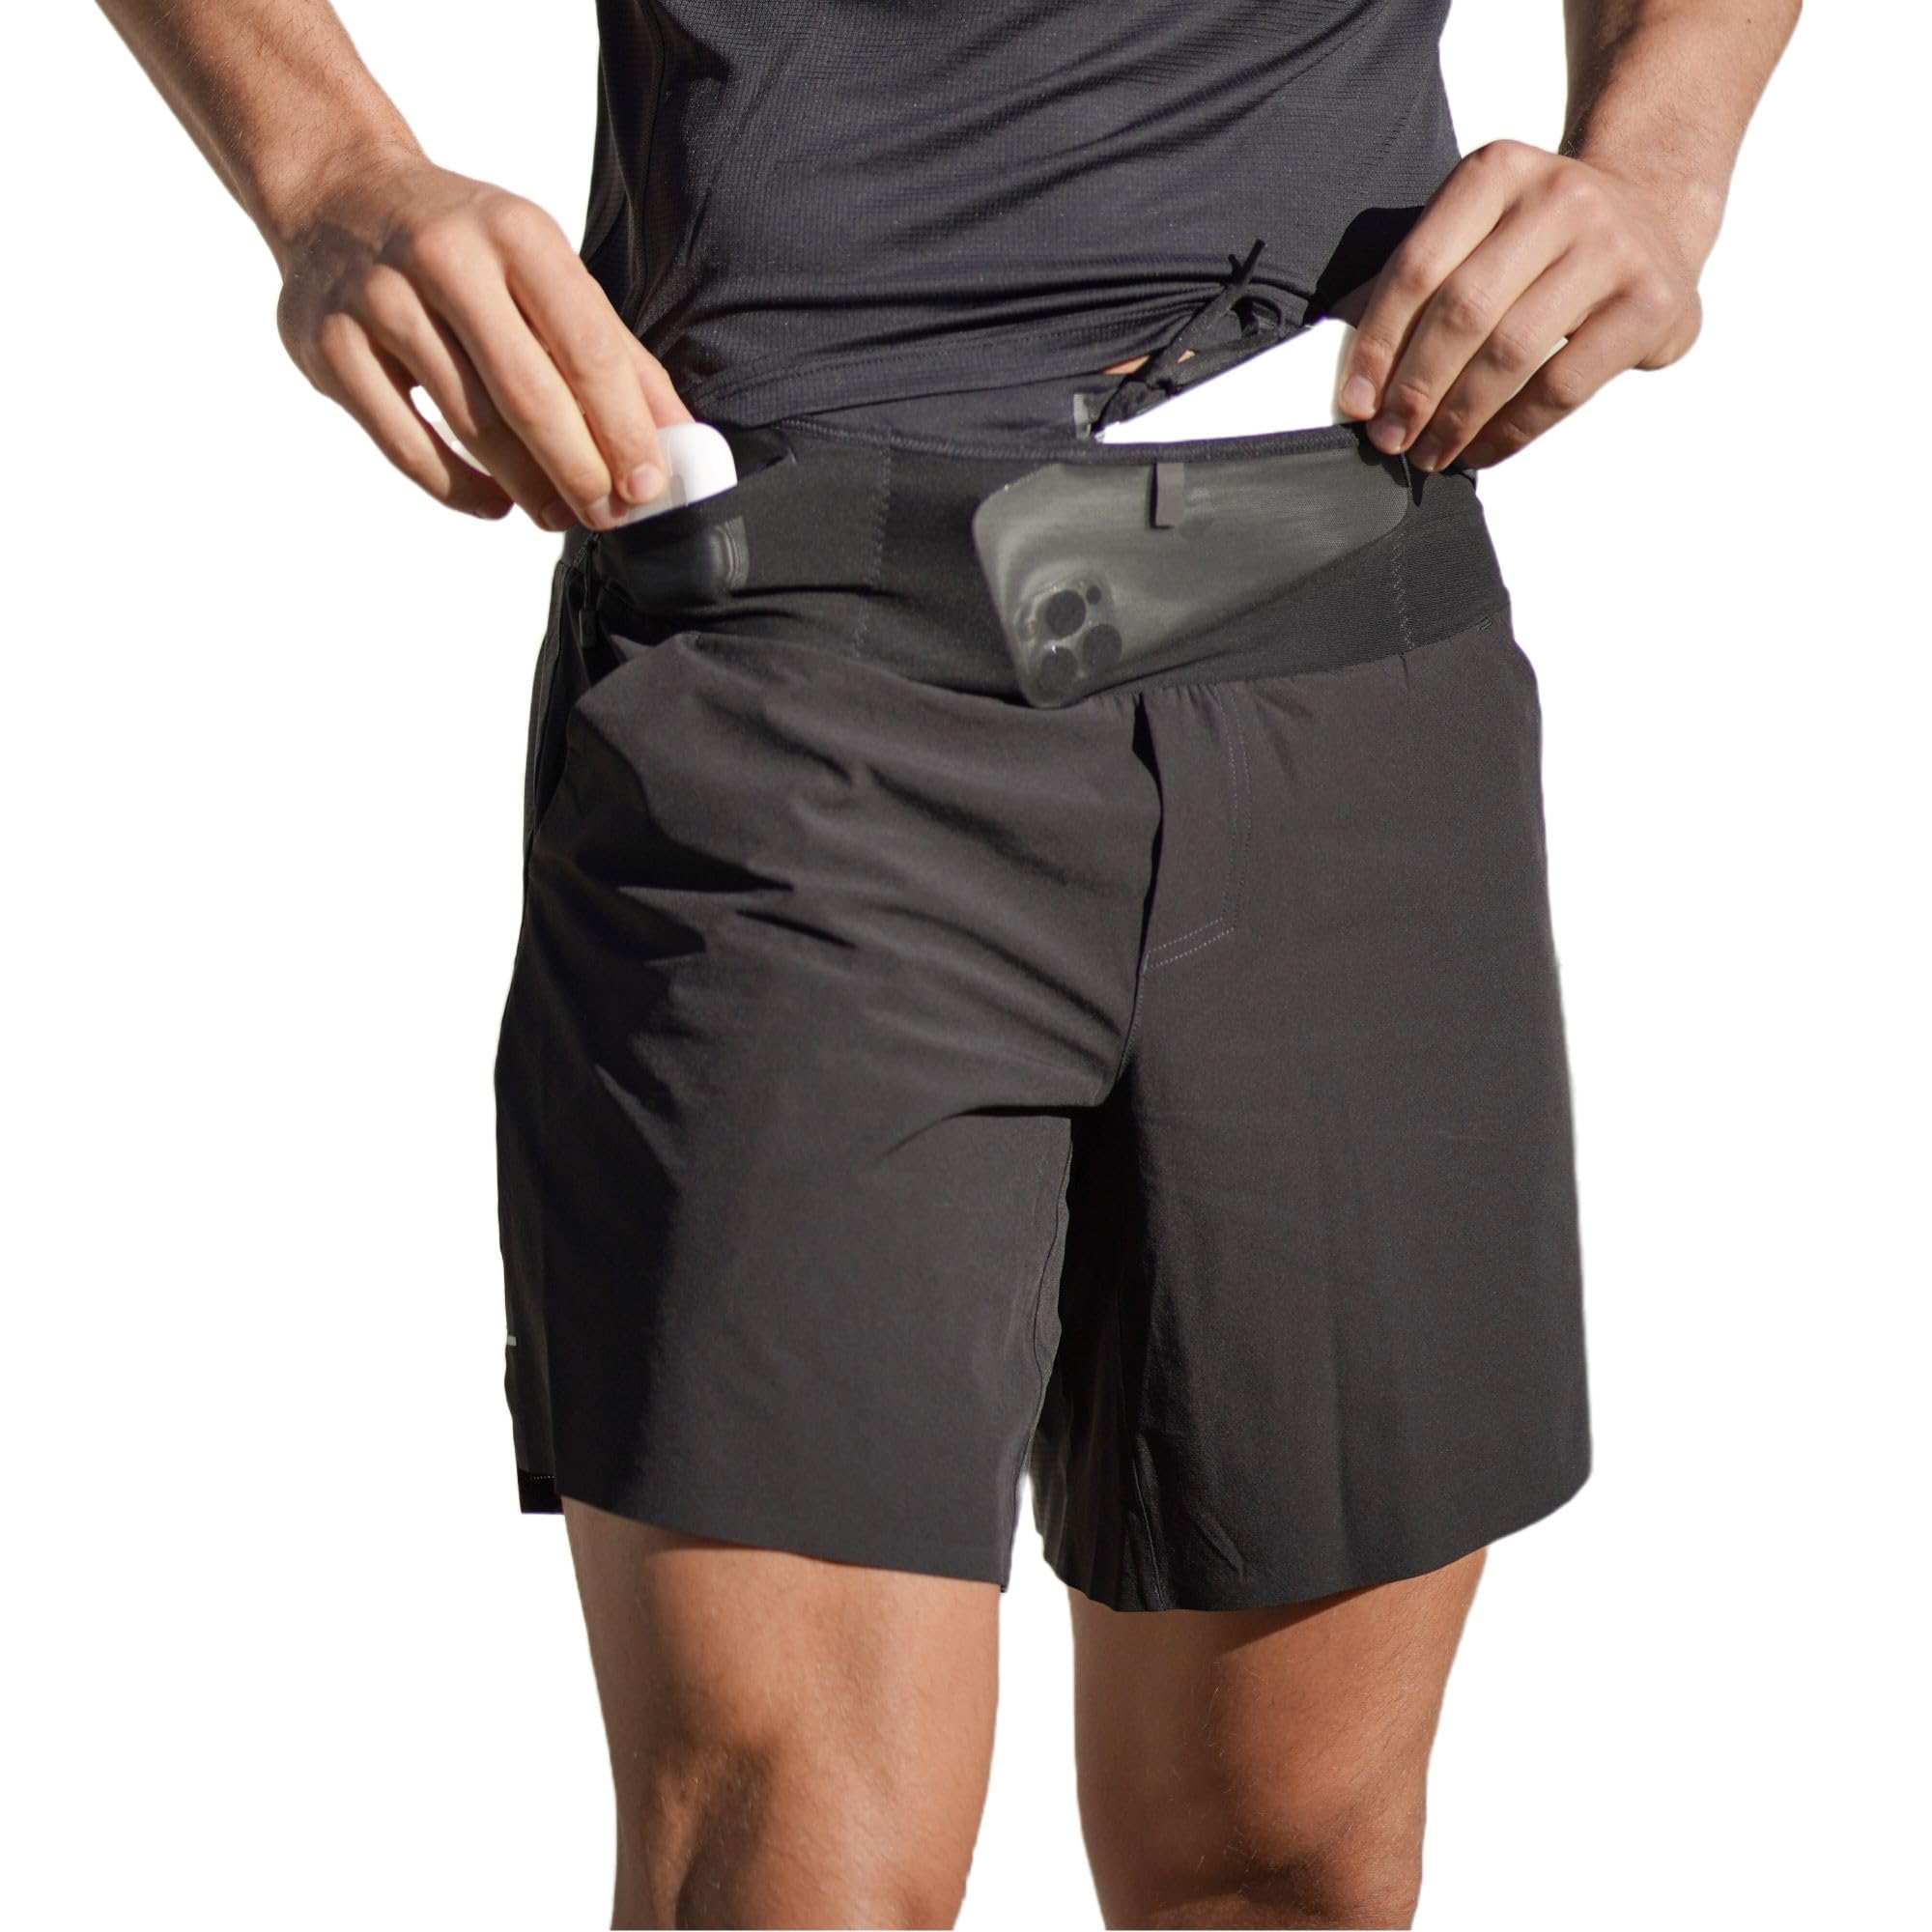 FlipBelt Black Athletic Running Shorts for Men Lightweight Moisture Wicking Exercise Shorts with Reflective Logo and 7 Po